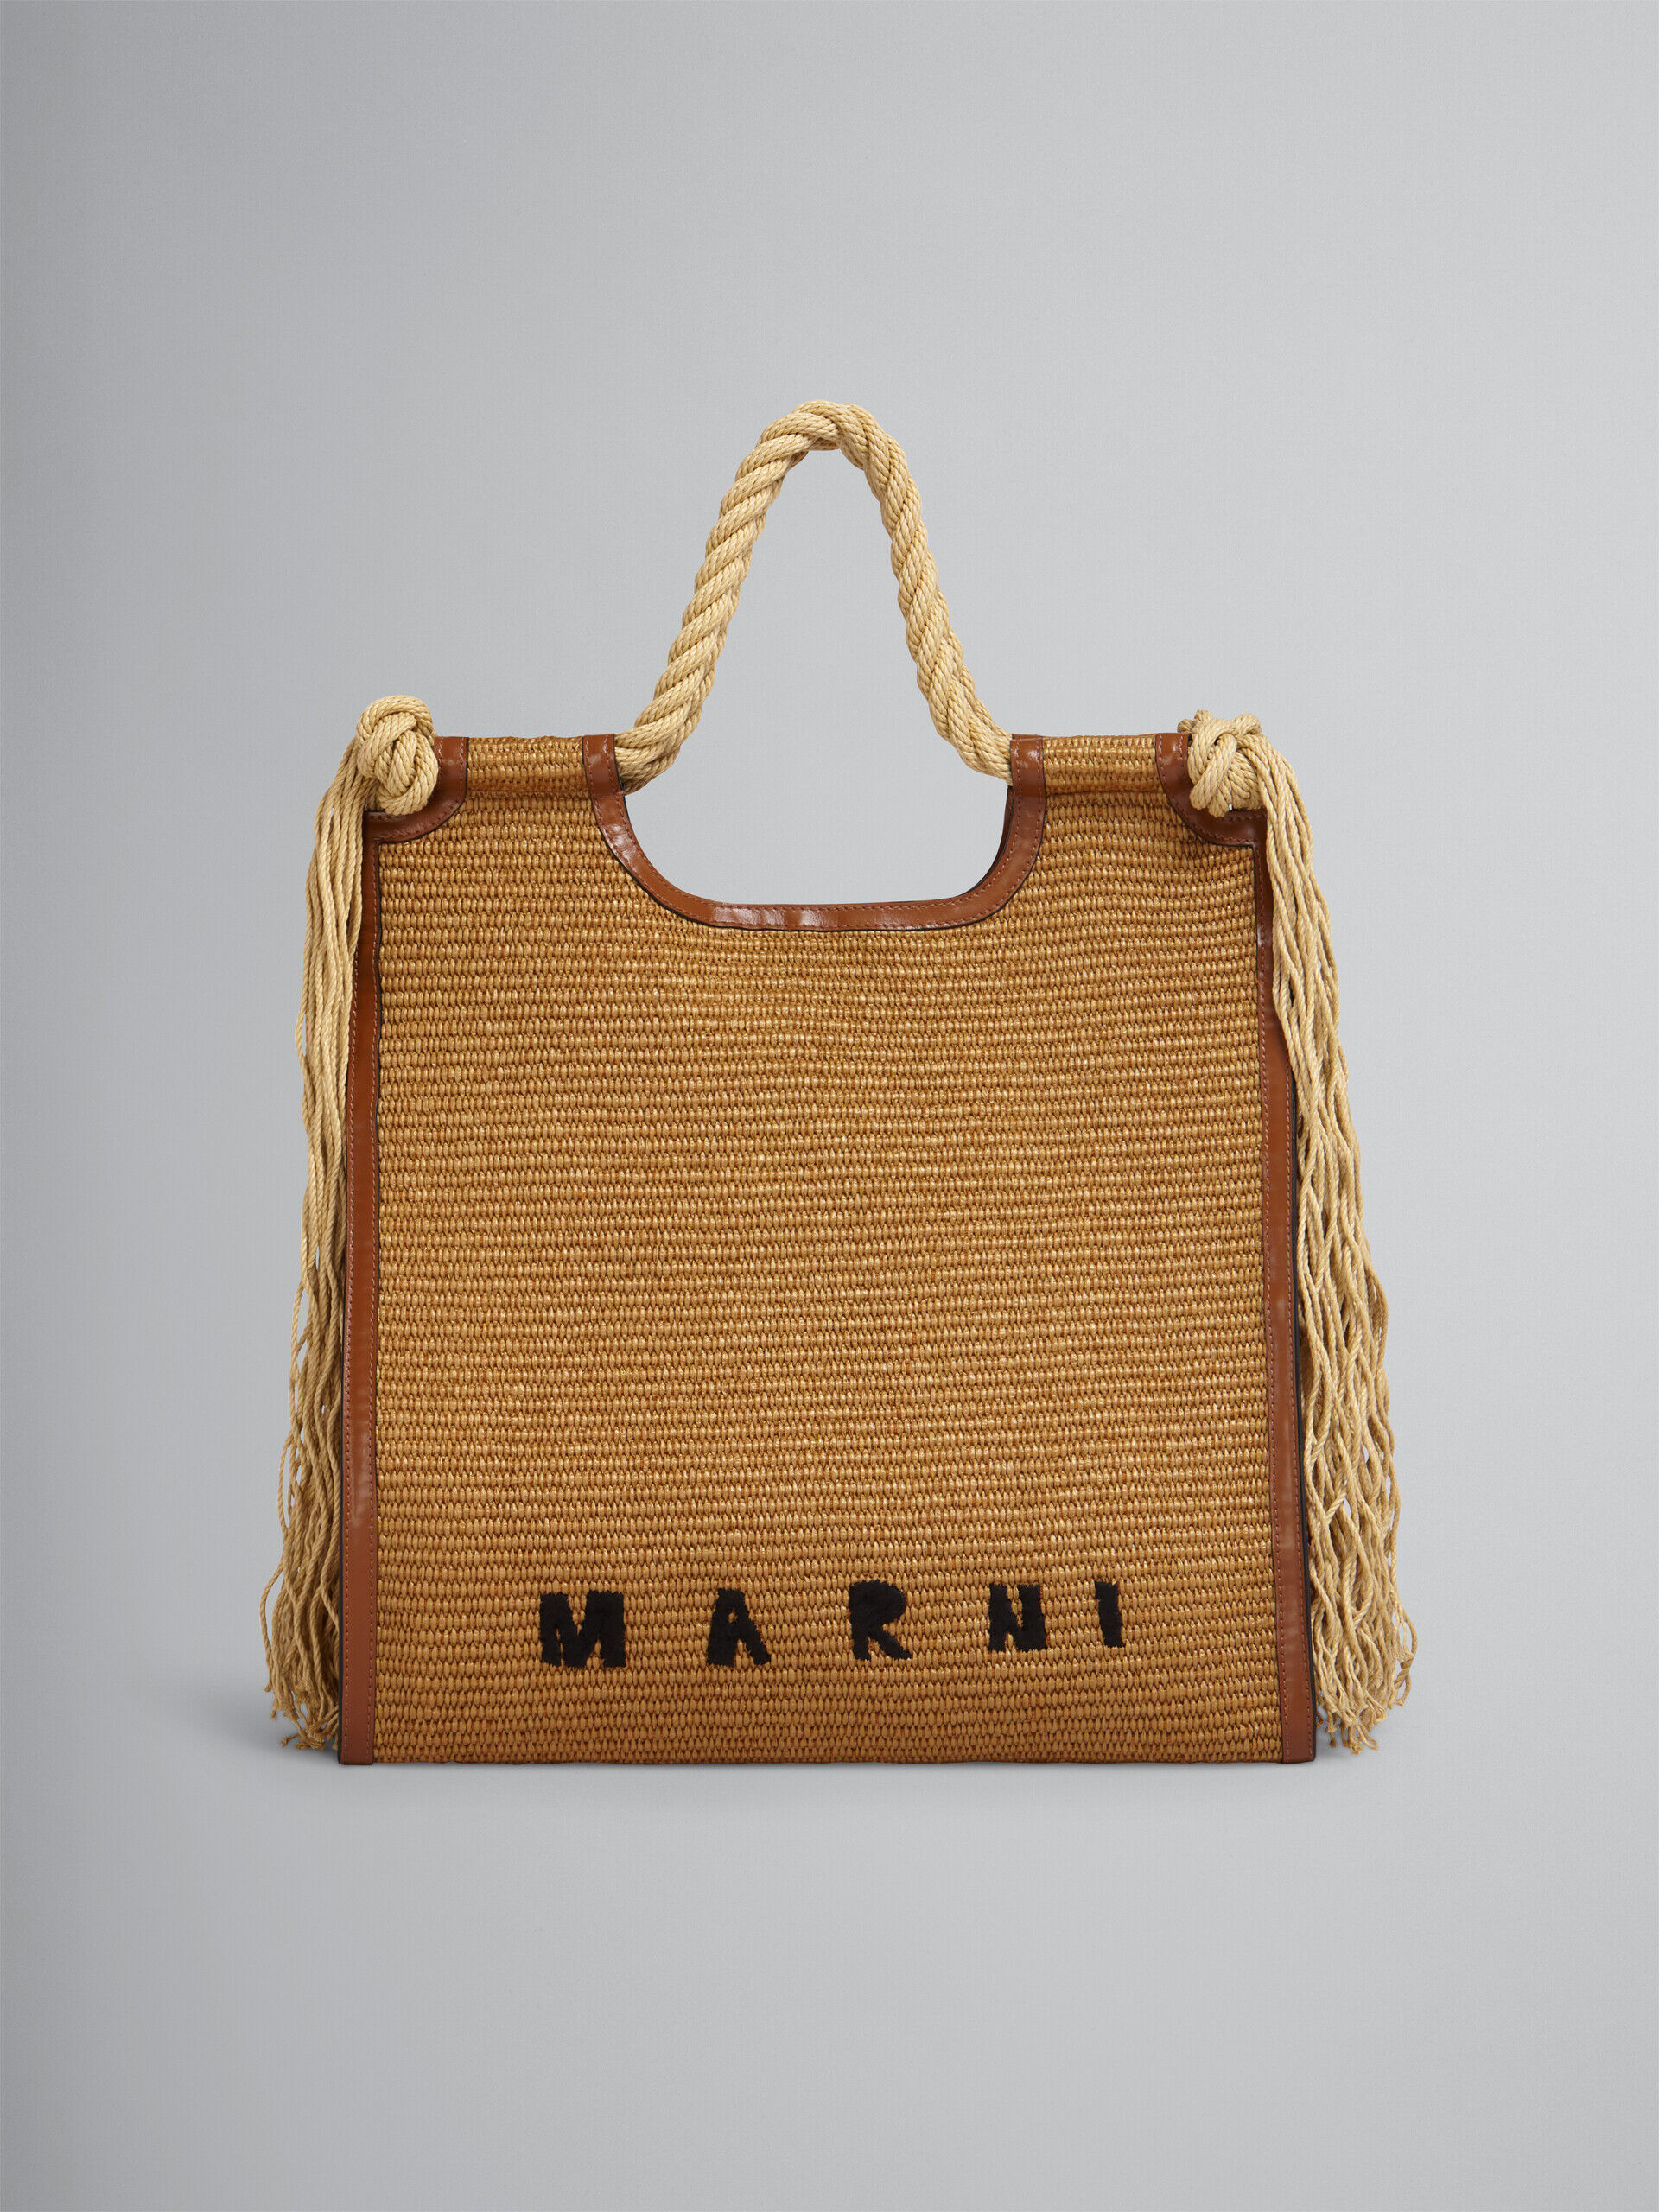 Handbags | Marni